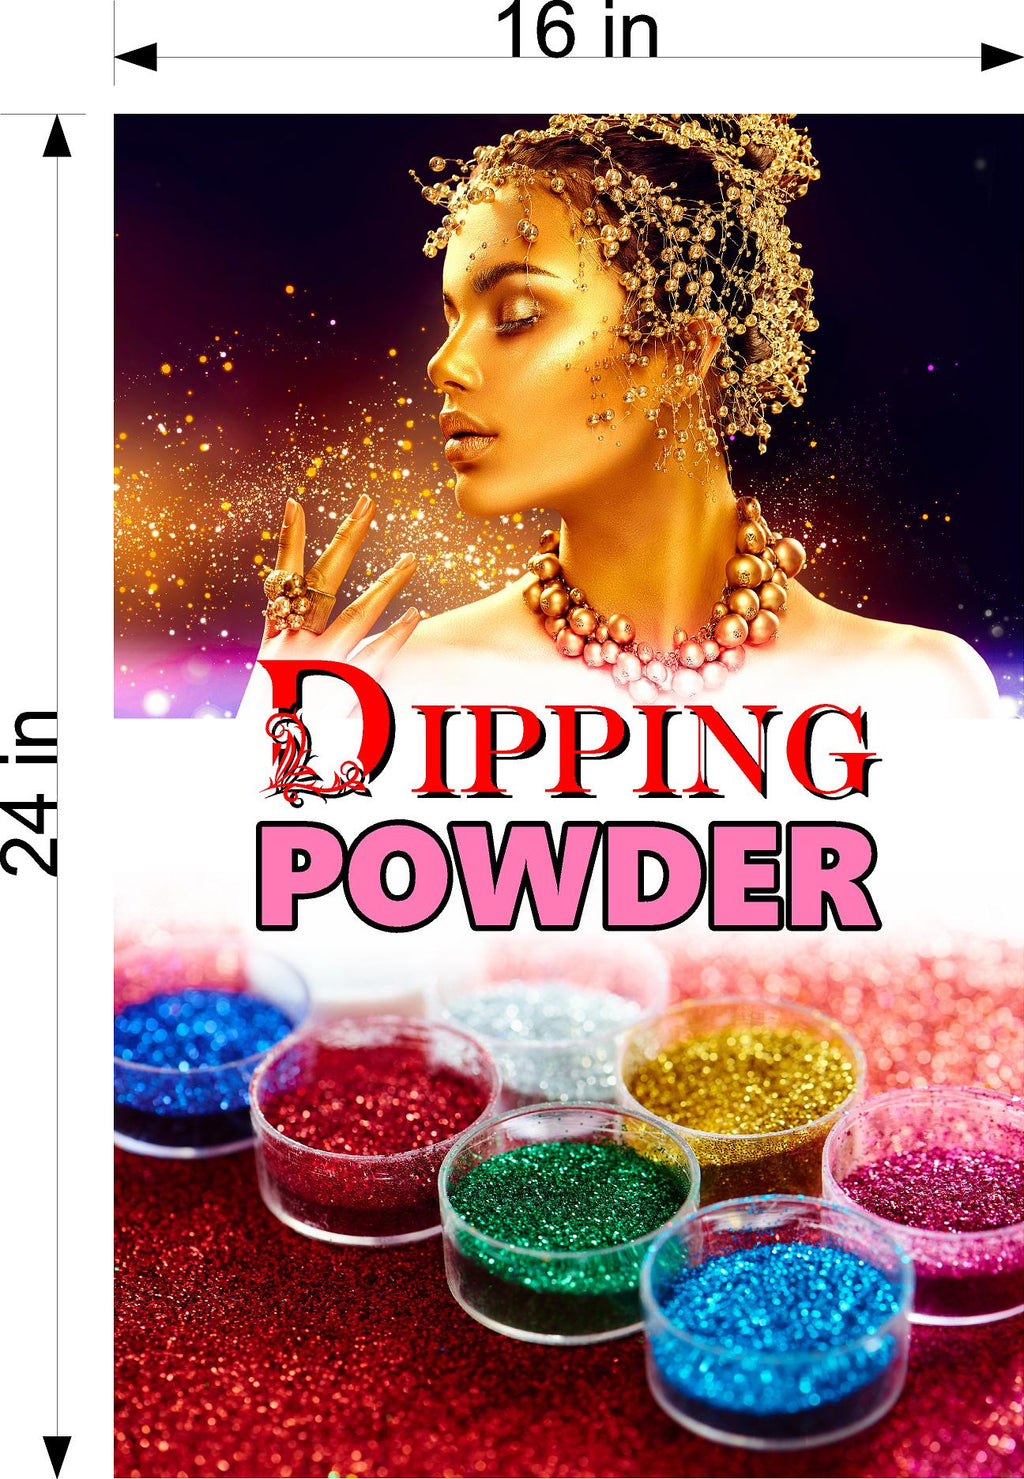 Dipping Powder 04 Photo-Realistic Paper Poster Premium Interior Inside Sign Non-Laminated Nail Salon Vertical